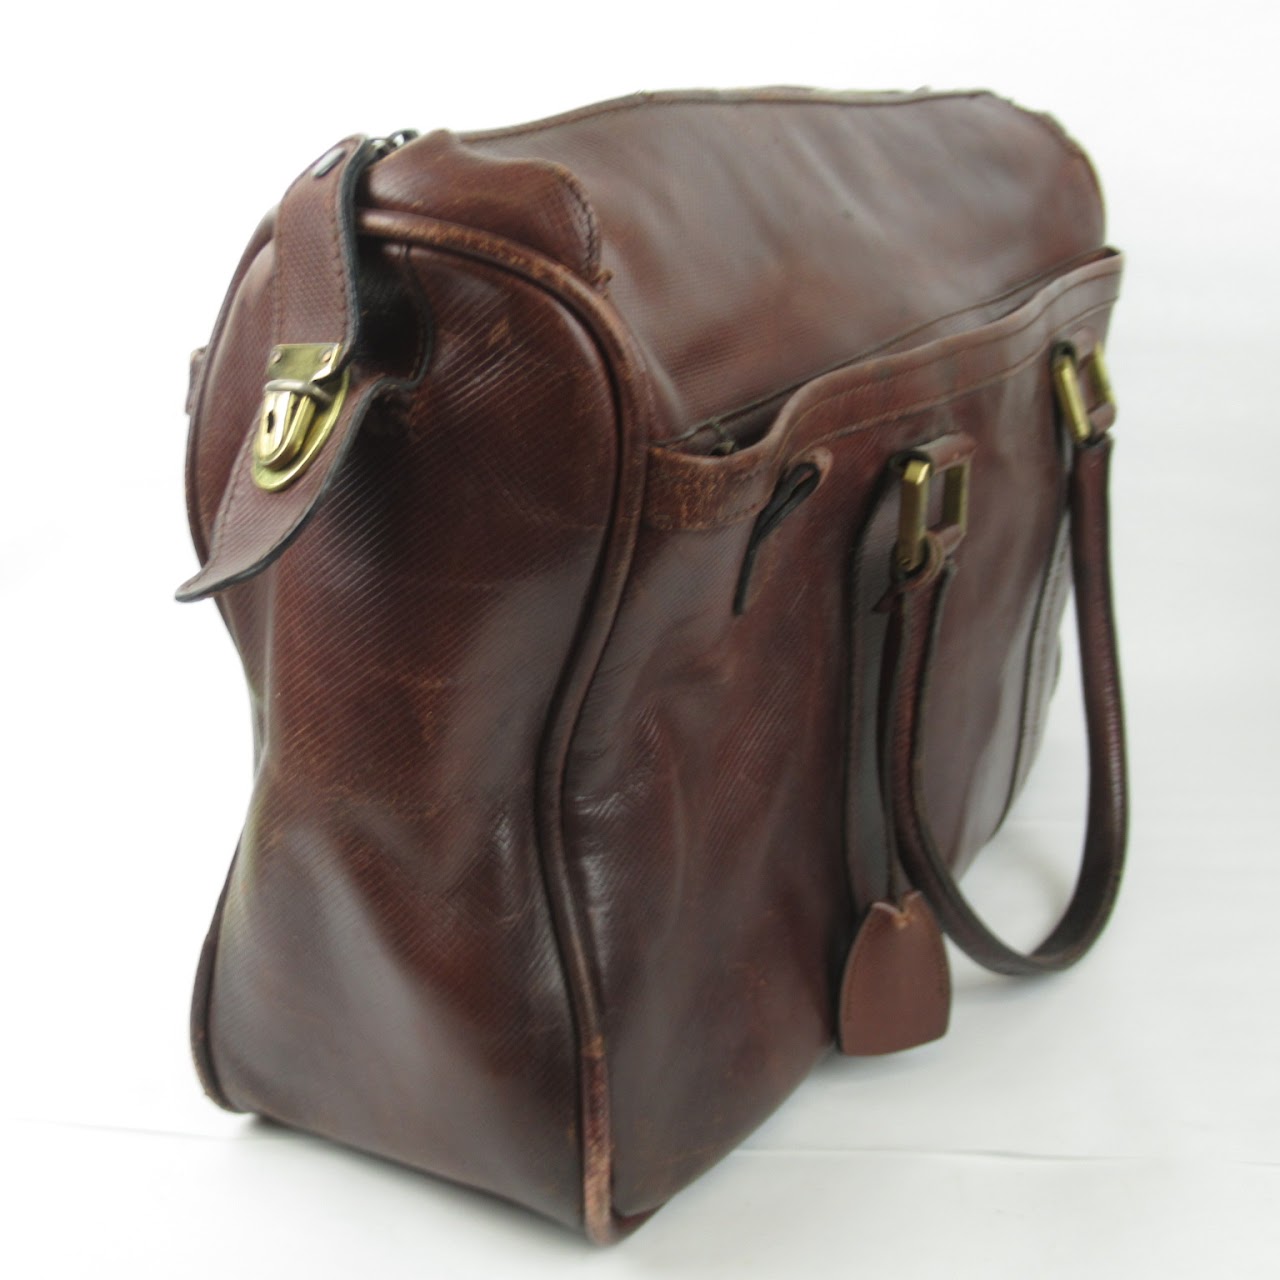 Bottega Veneta Leather Doctor's Style Bag